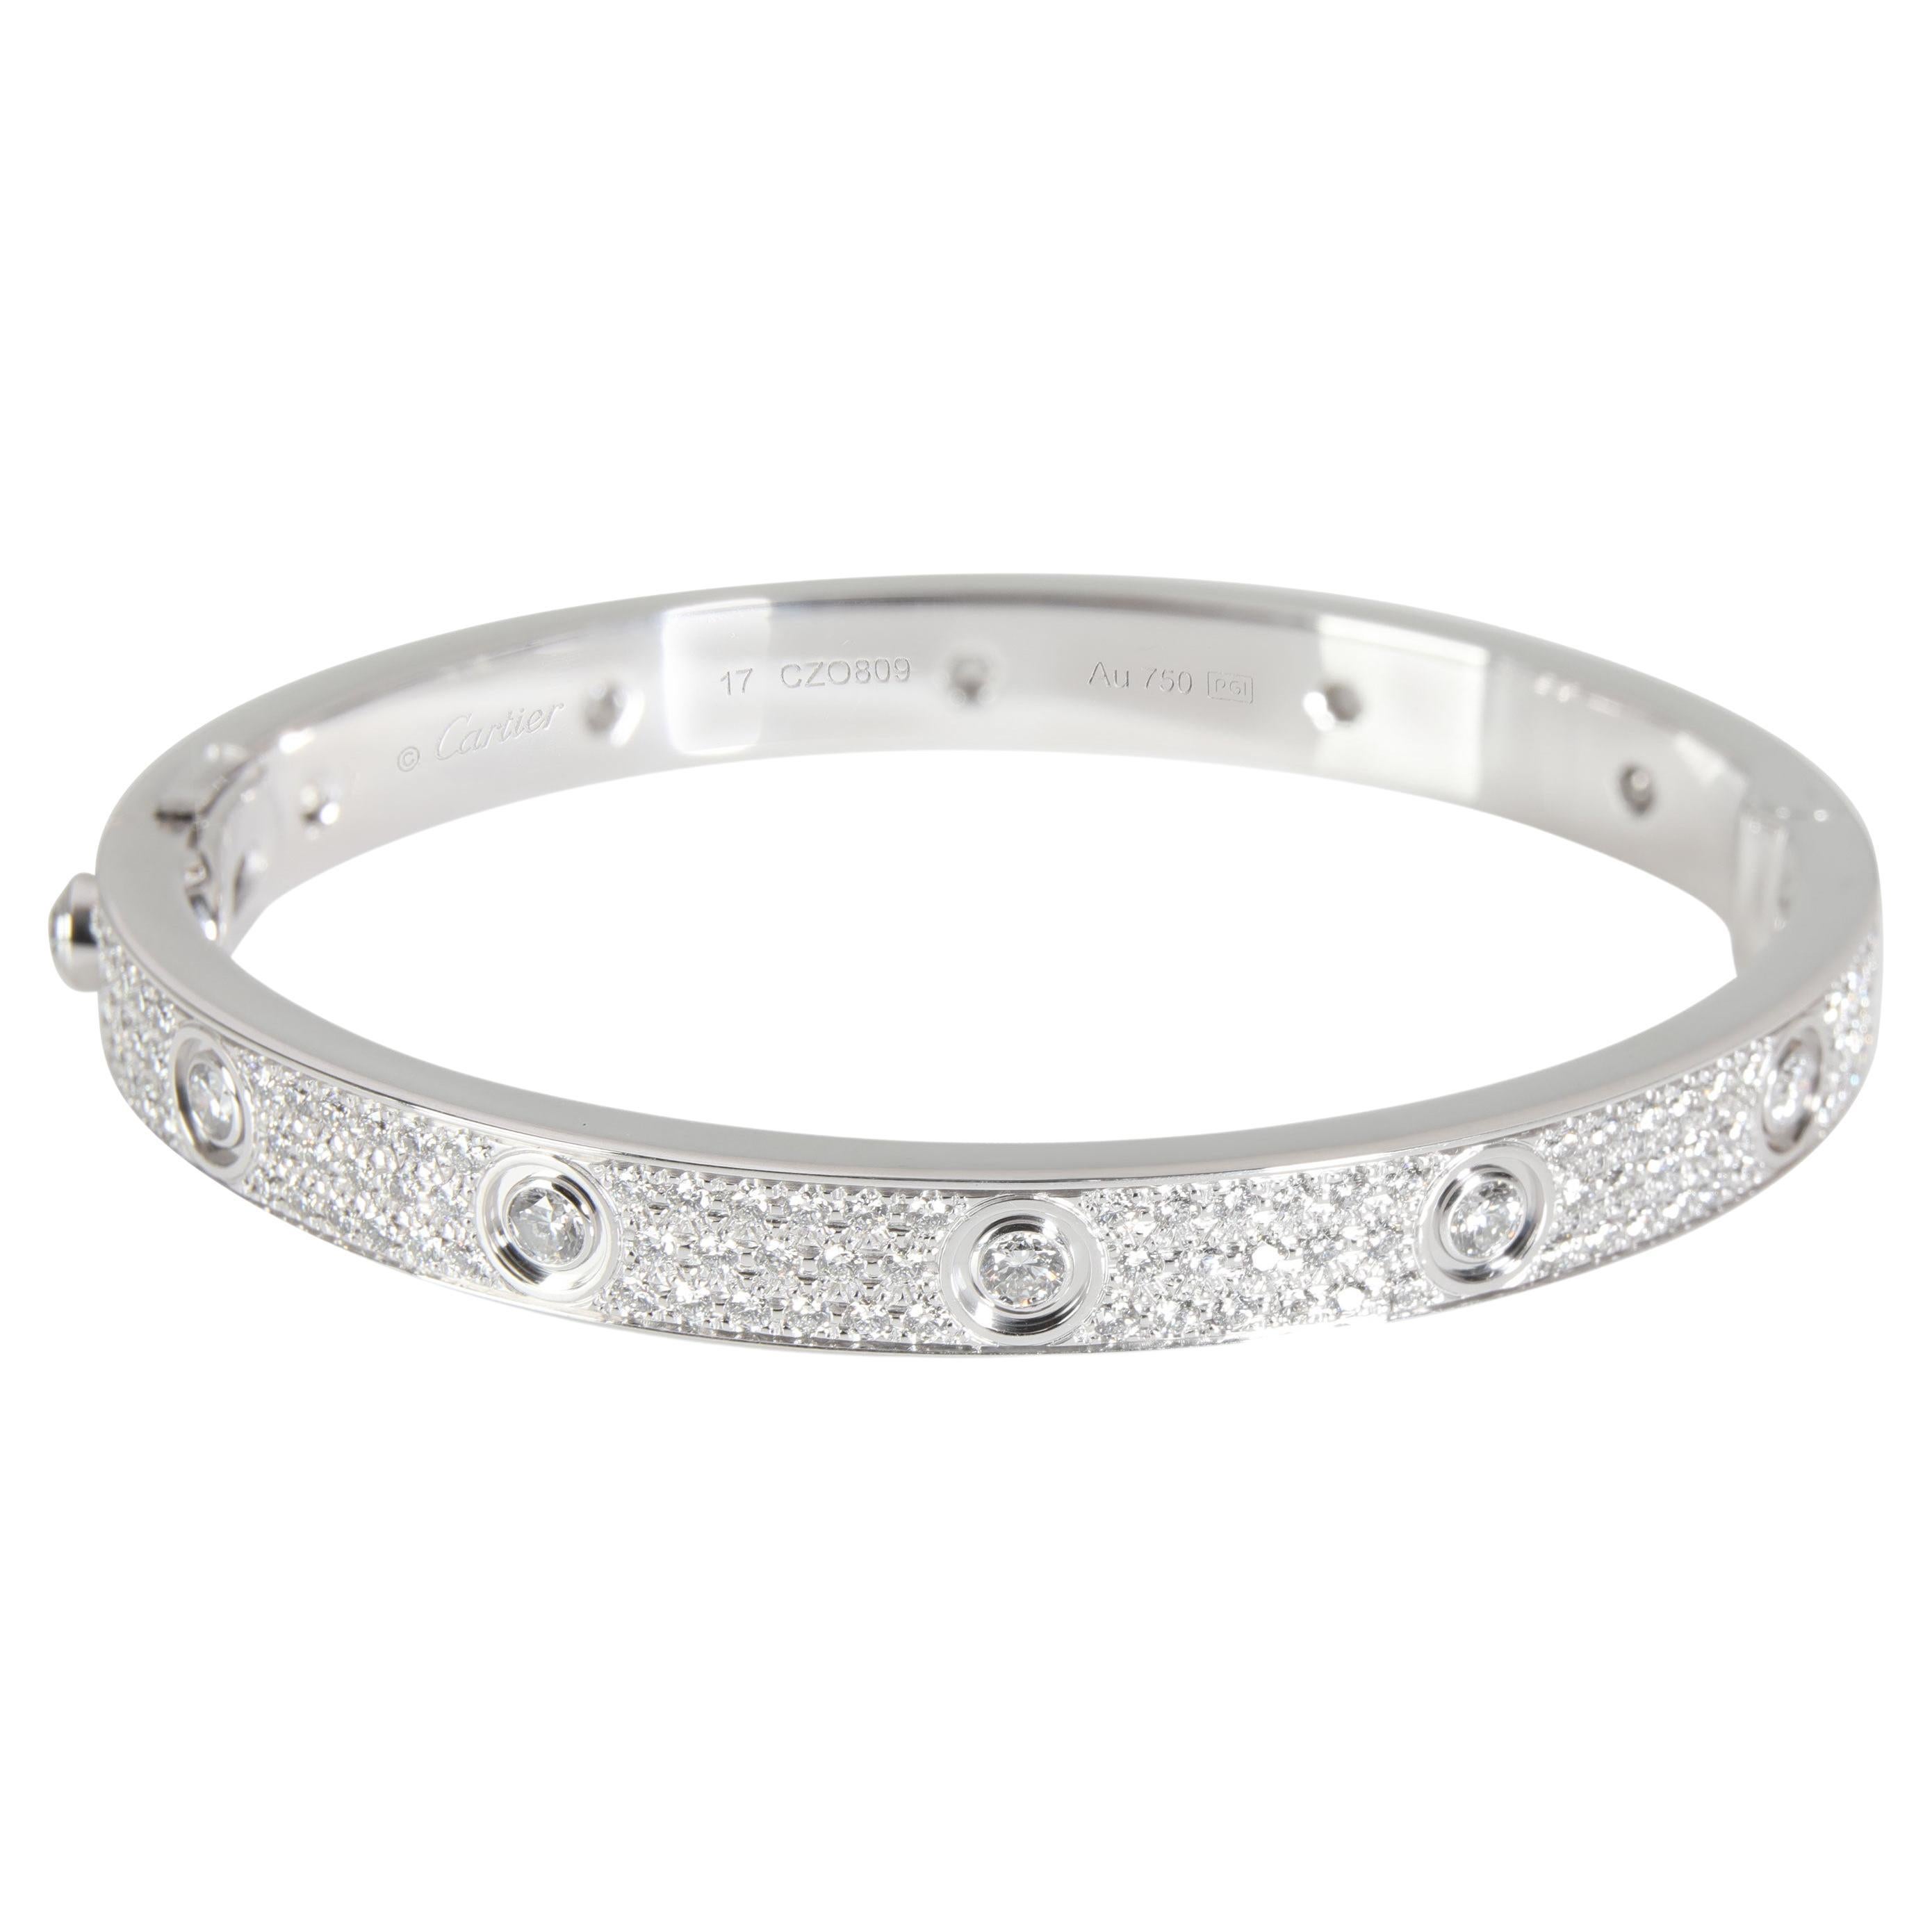 Cartier Love Diamond Bracelet in 18K White Gold 3.15 CTW